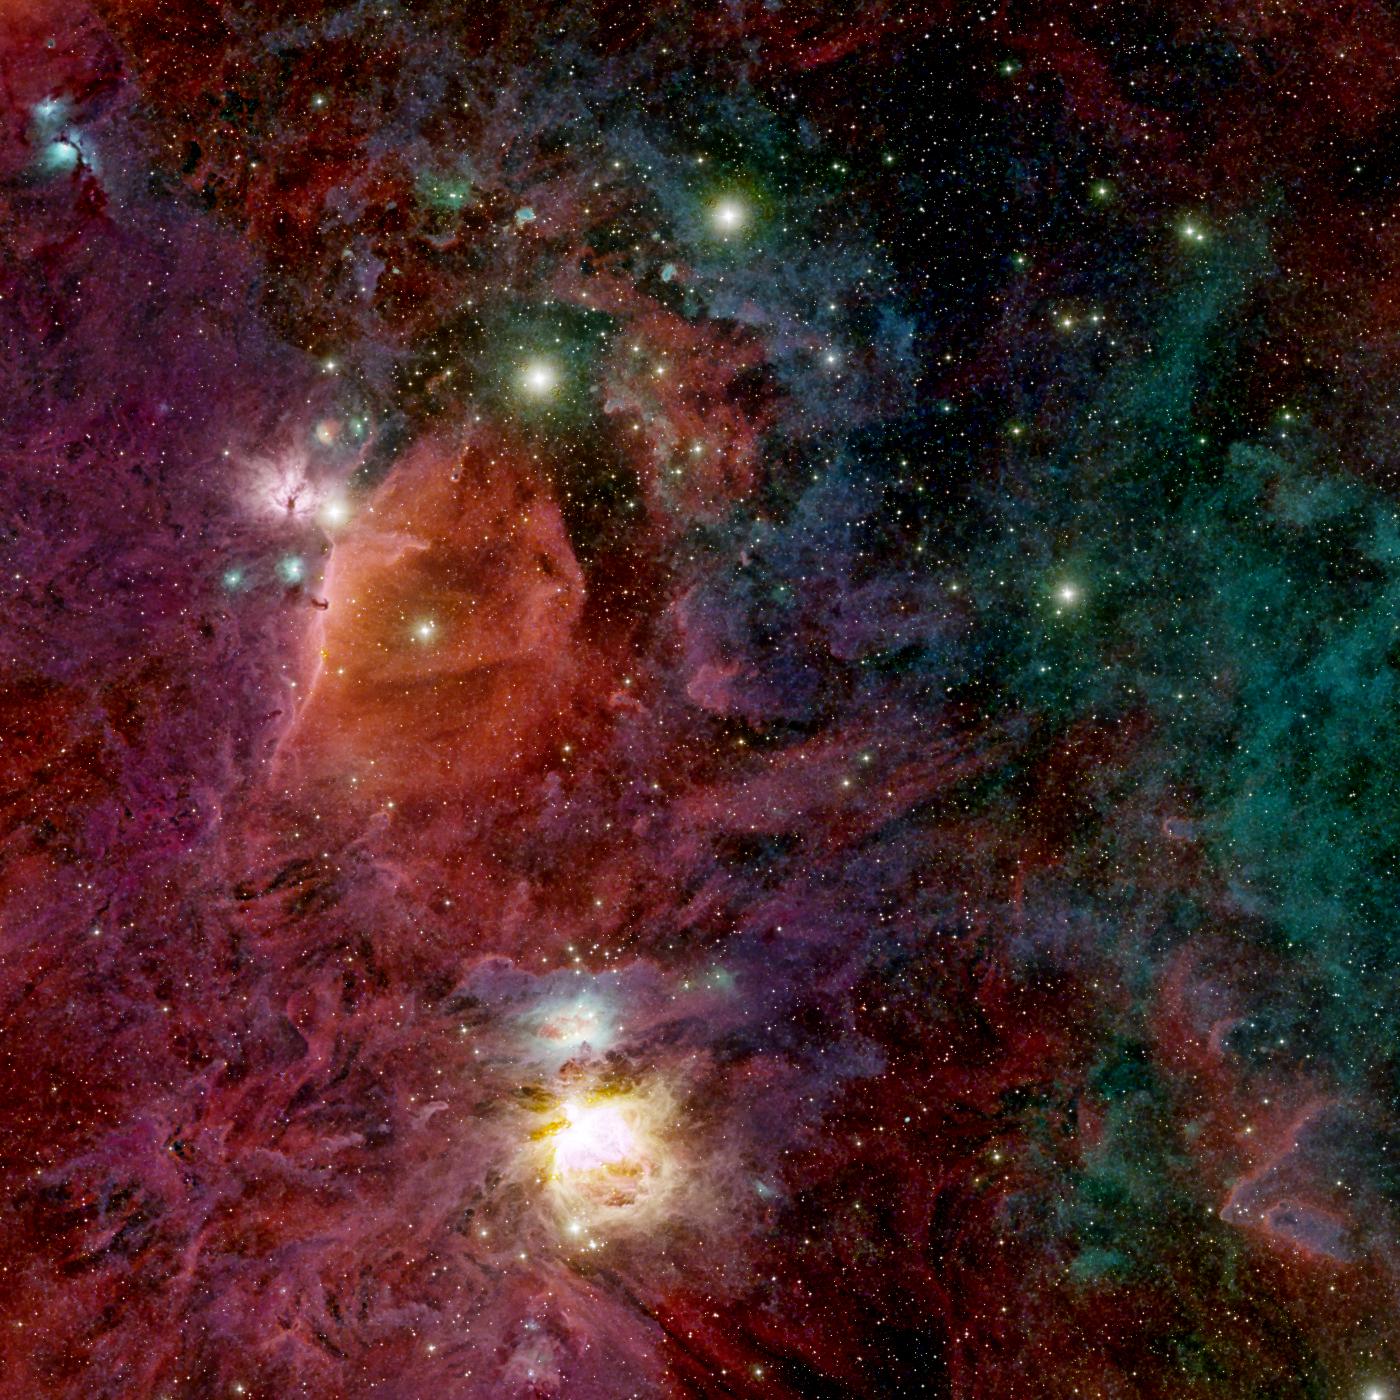 Orion region: M42, Running Man Nebula, Horsehead Nebula, Flame Nebula